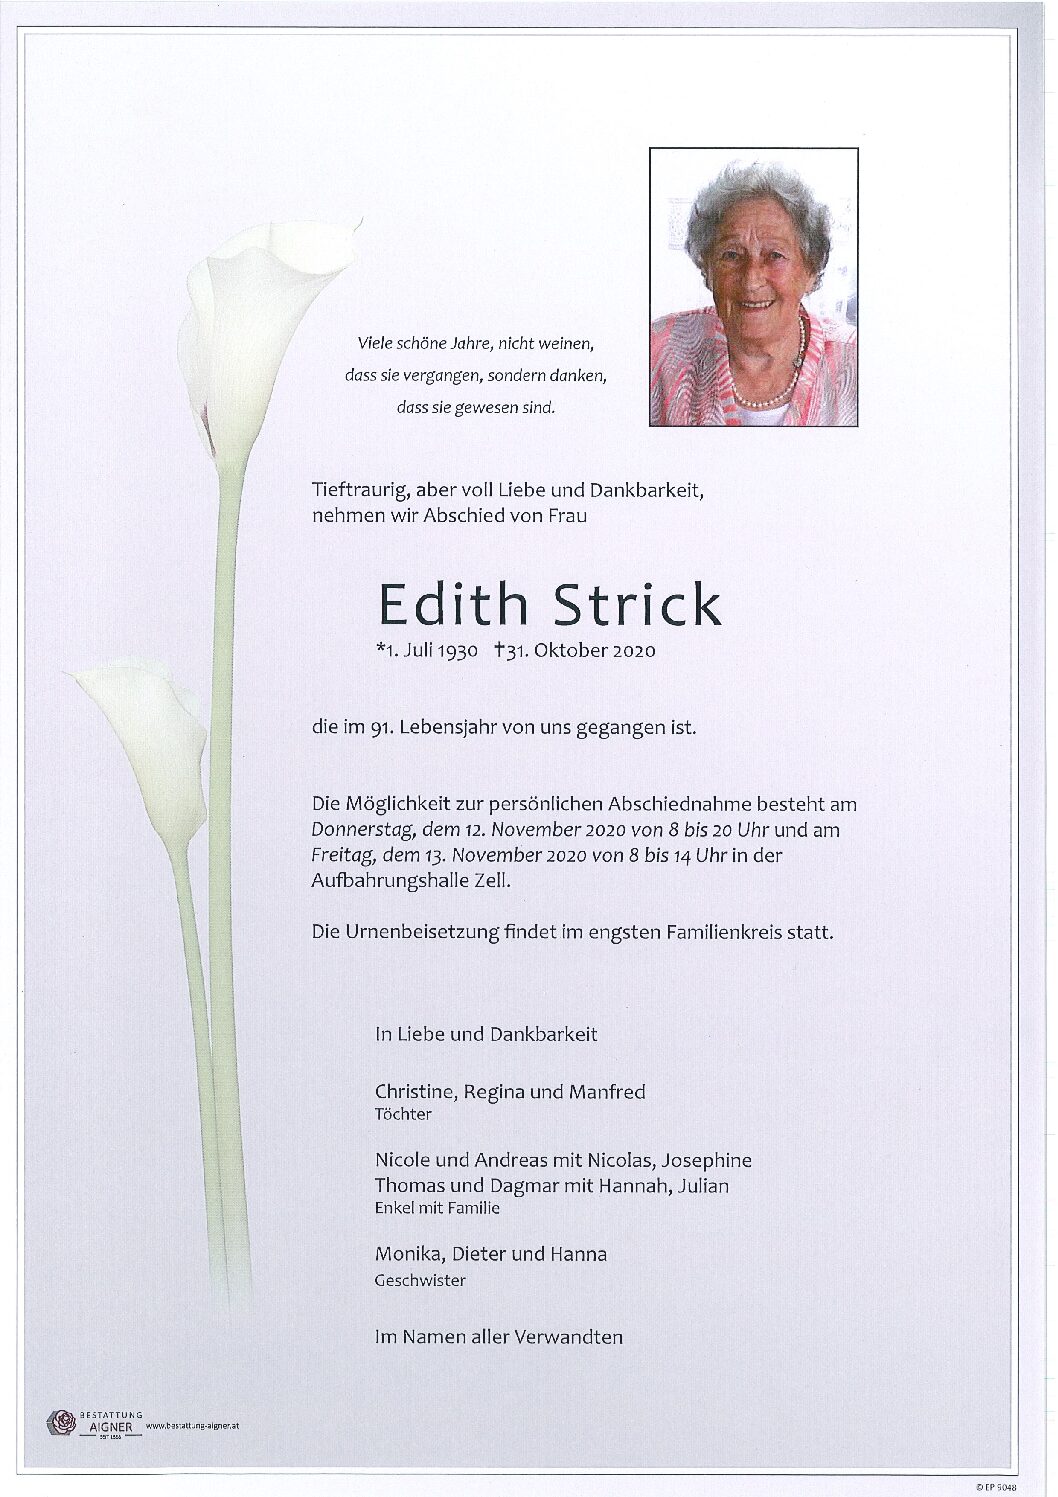 Edith Strick